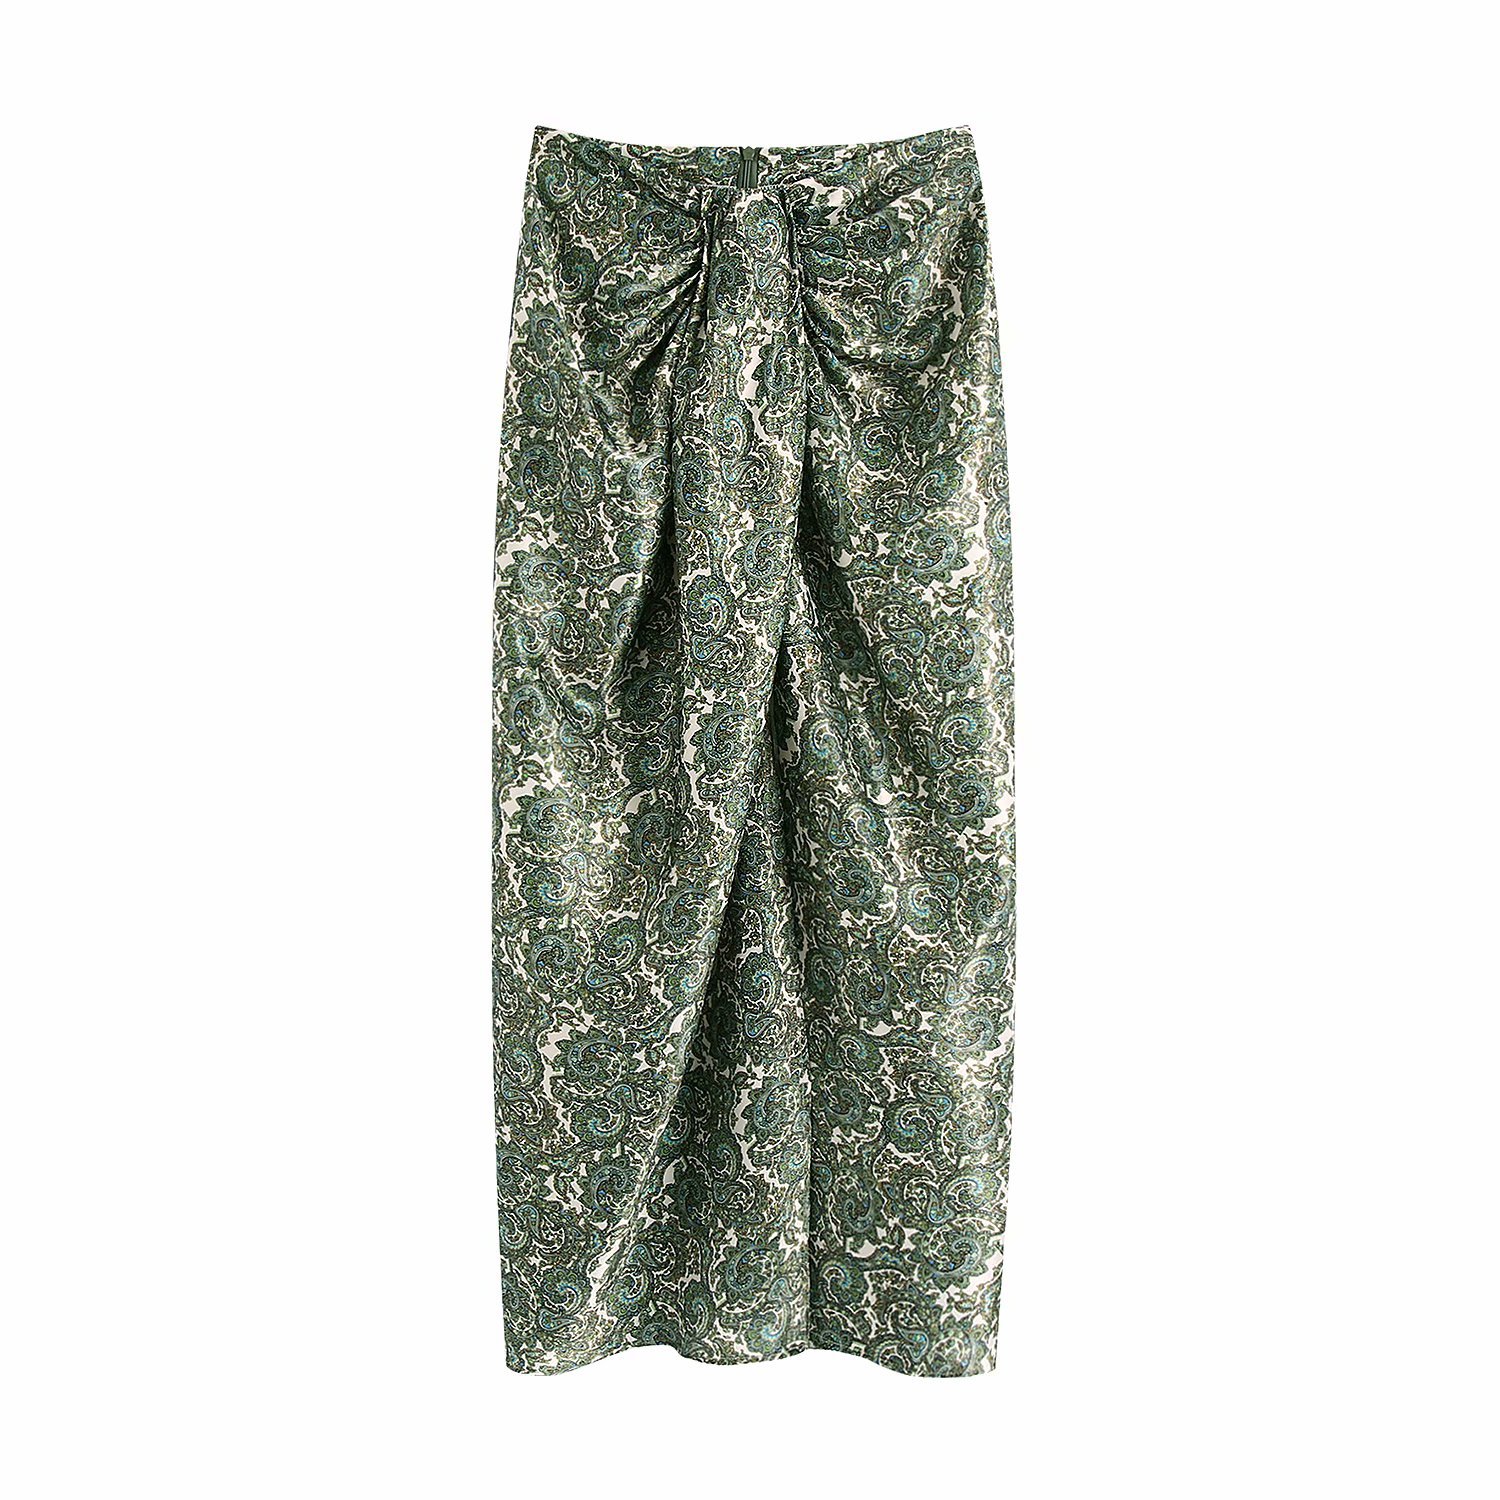 women s print sarong skirt nihaostyles clothing wholesale NSAM77819